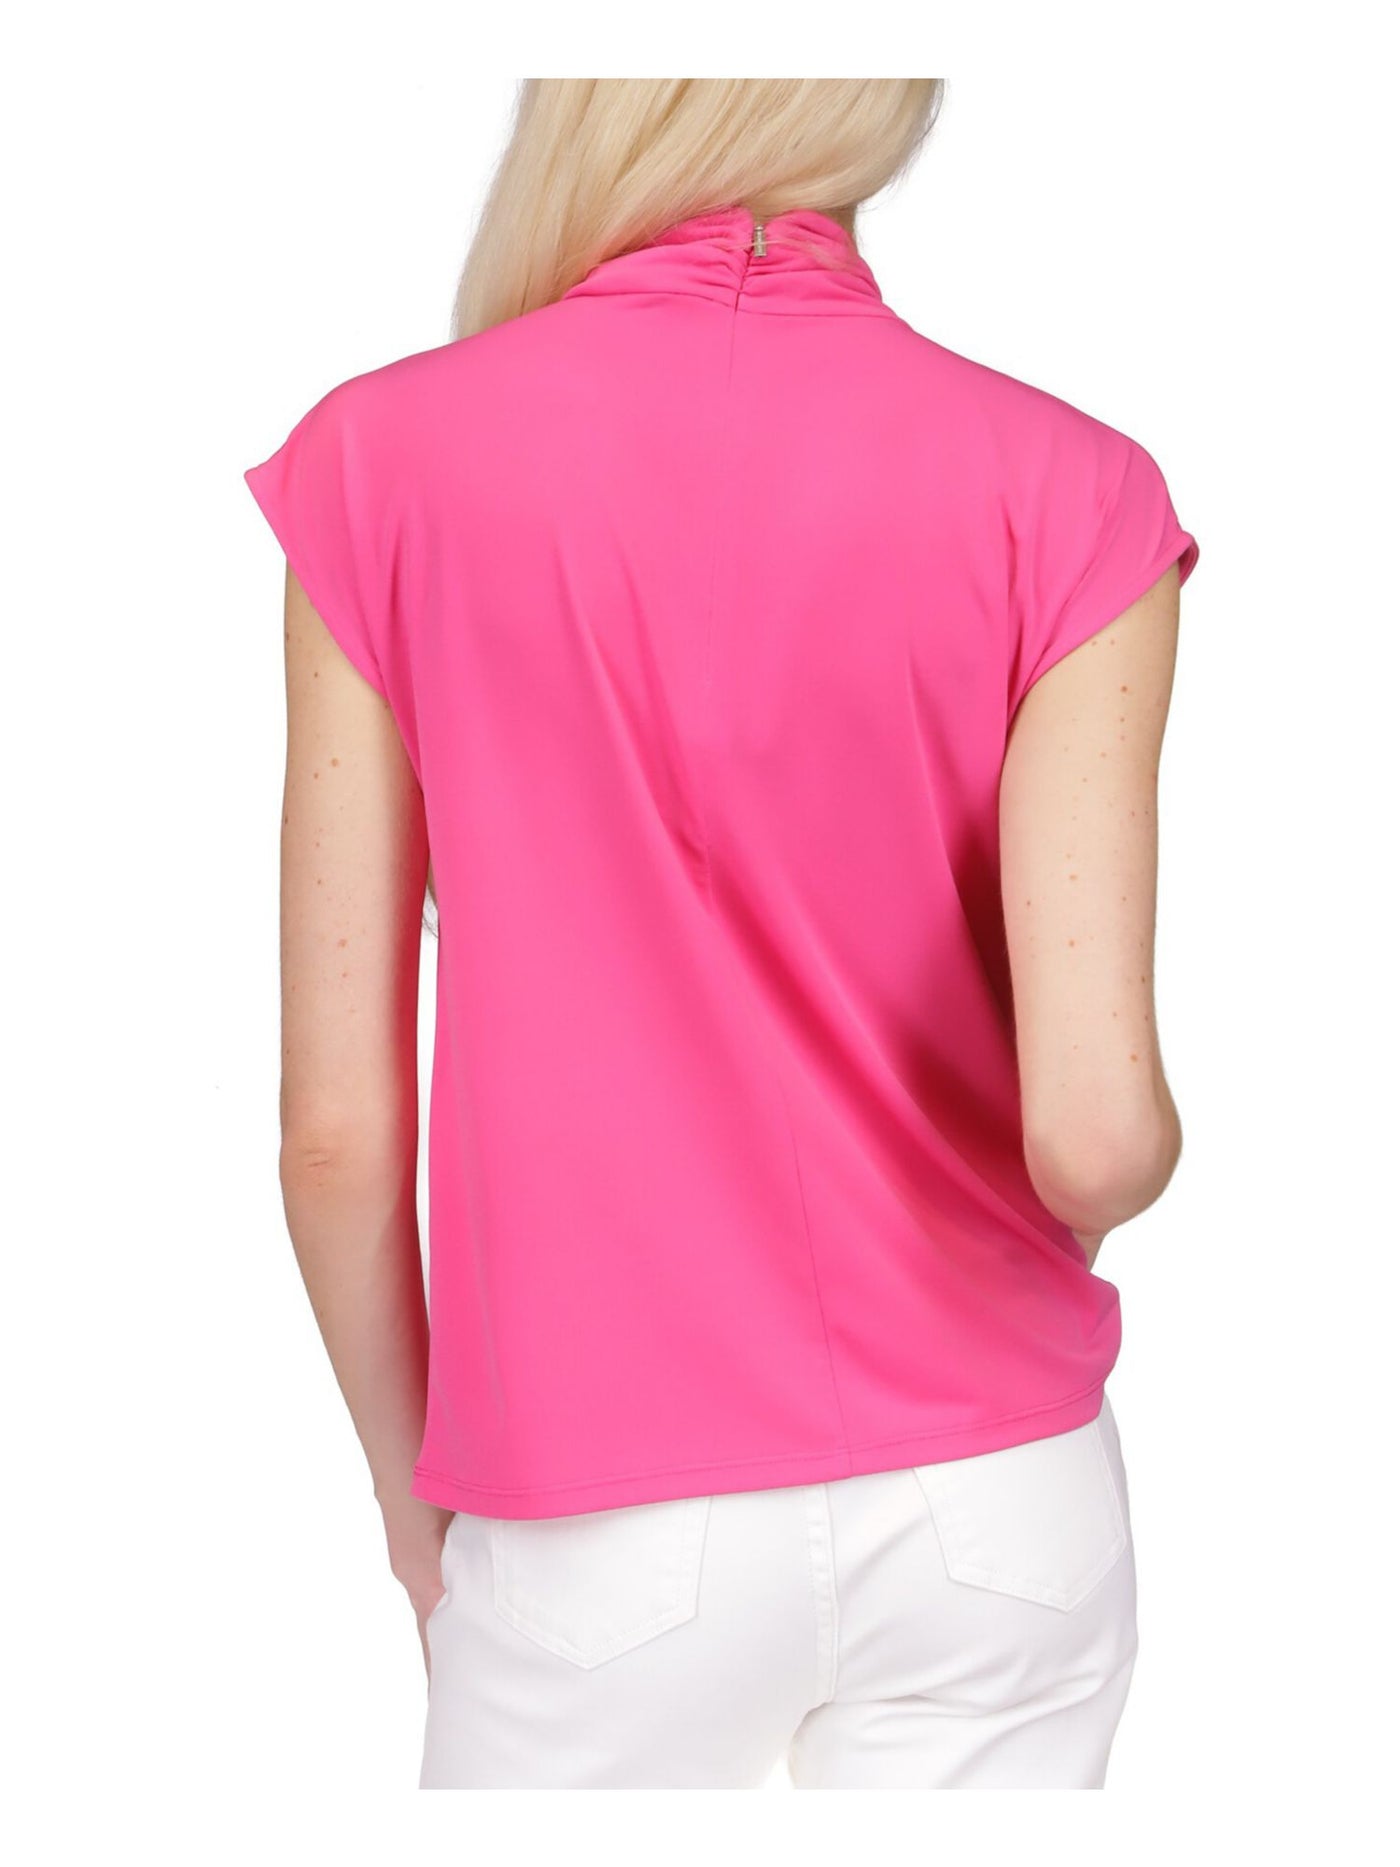 MICHAEL MICHAEL KORS Womens Pink Zippered Twist Front Unlined Keyhole Detail Cap Sleeve Mock Neck Top XS